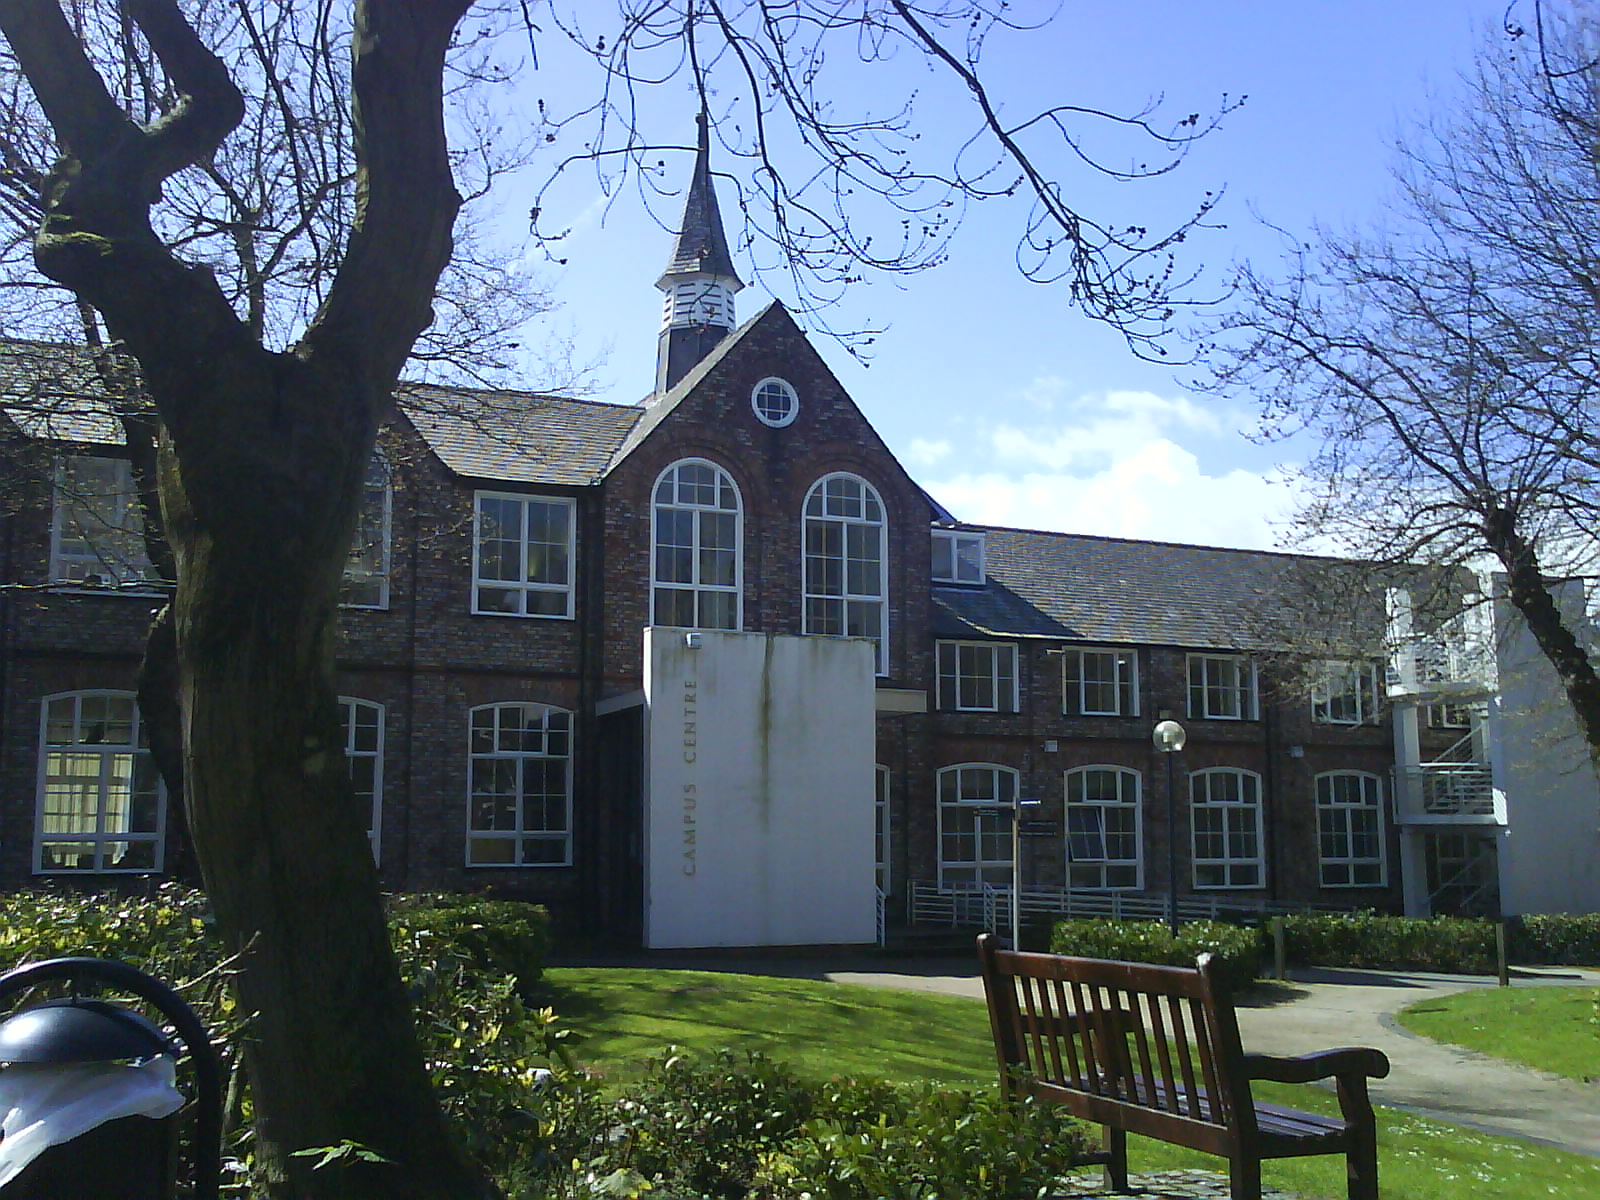 Liverpool John Moores University International Study Centre